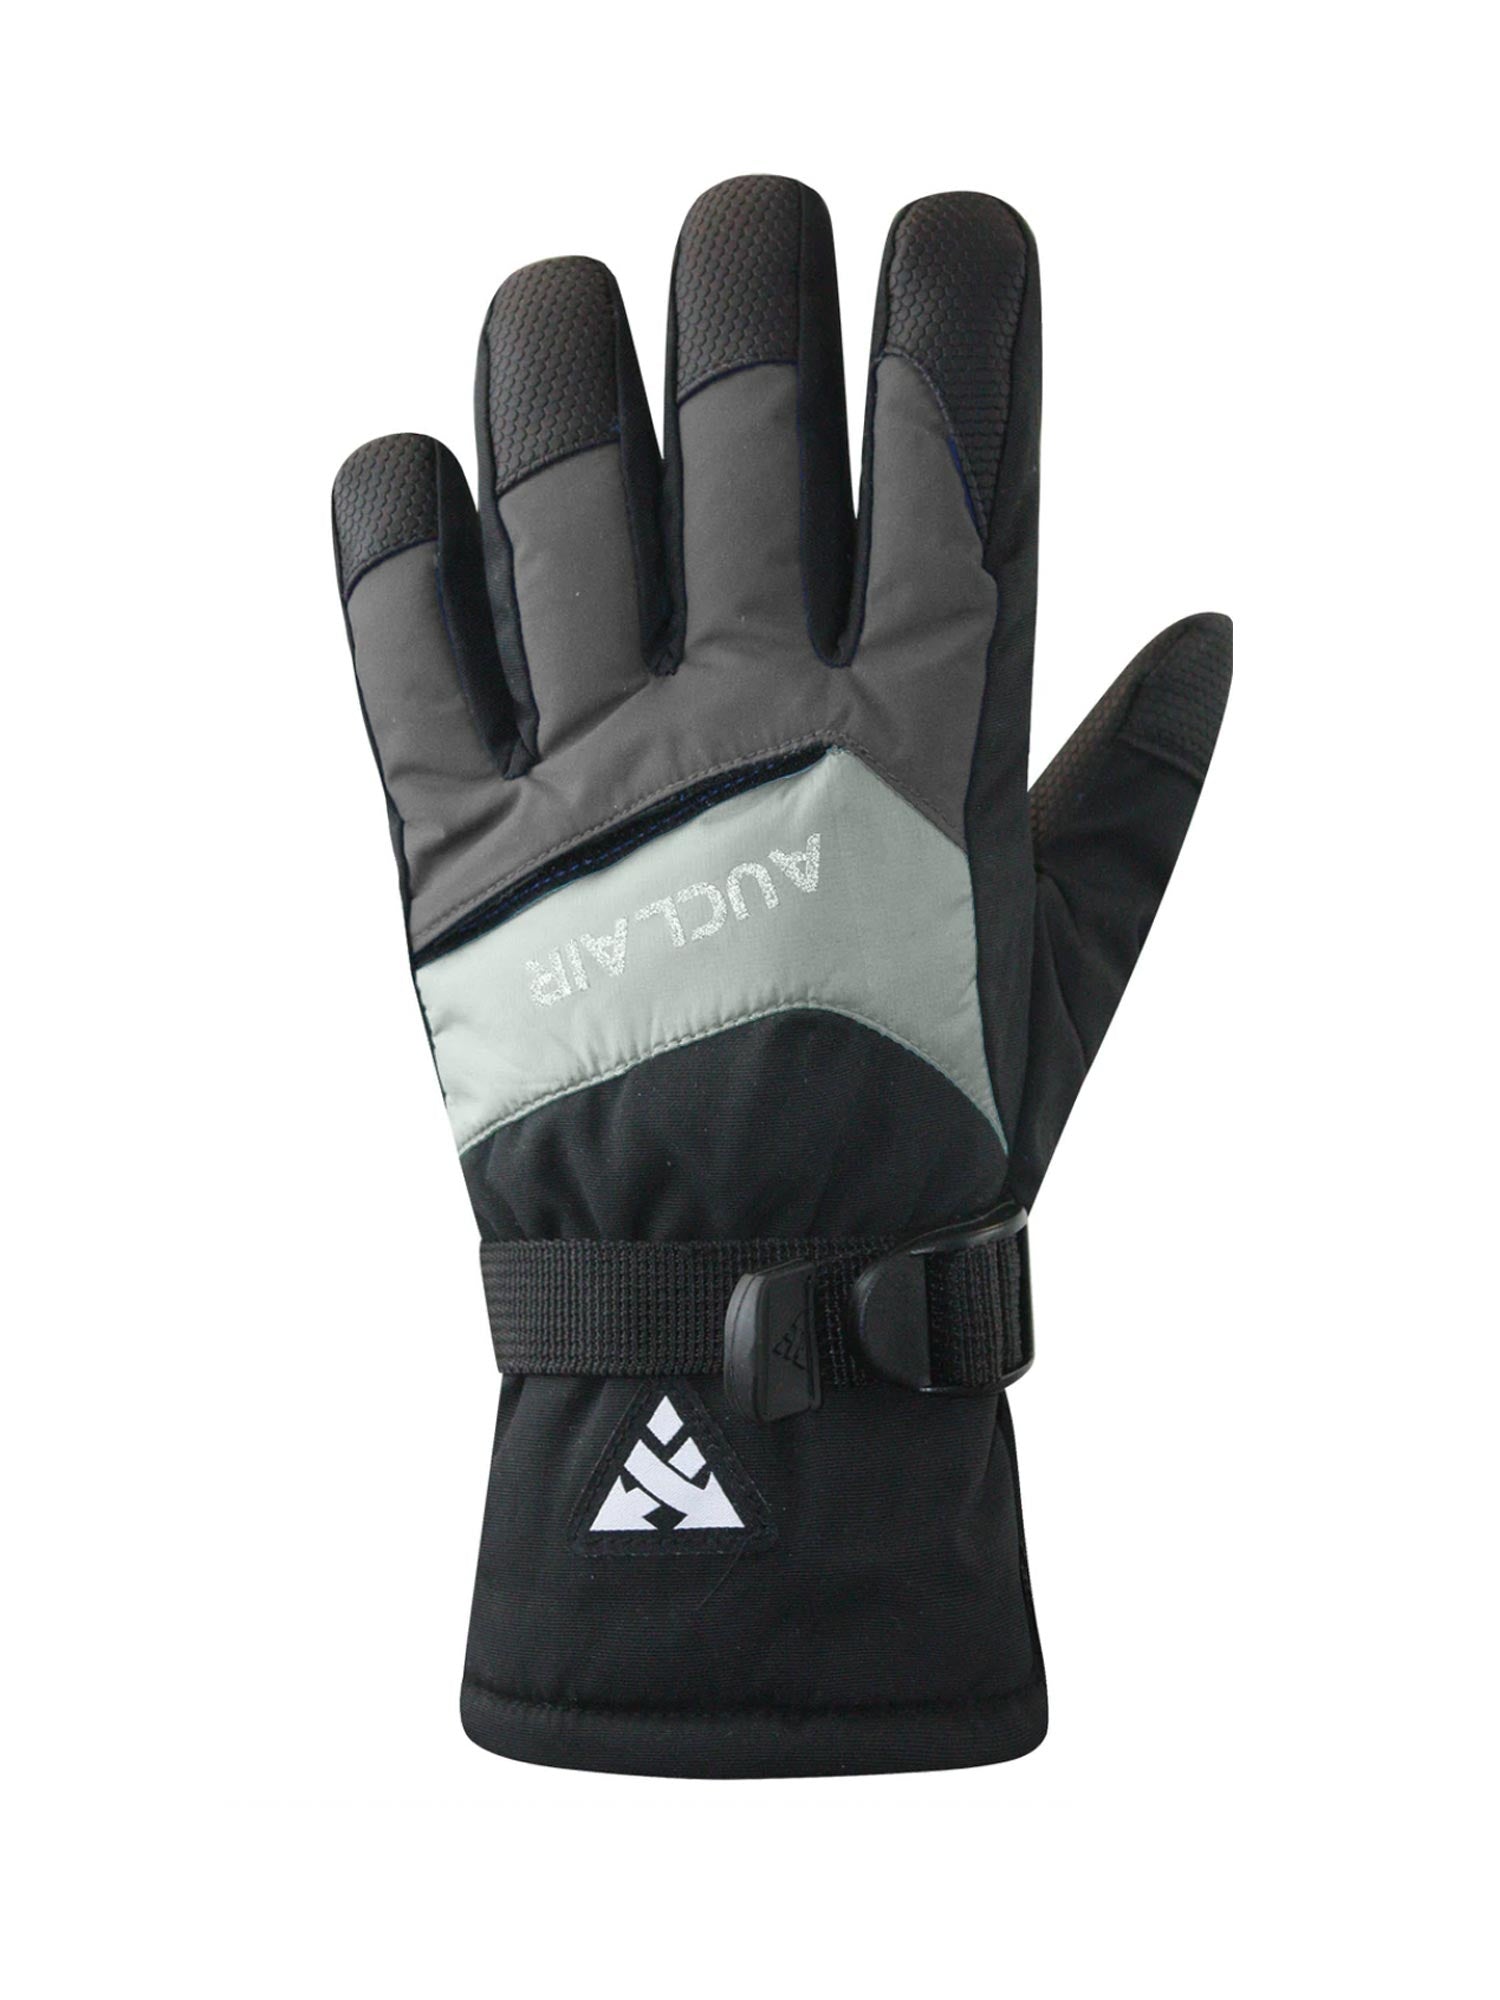 Kids Auclair Frost ski/snowboard gloves, black and grey